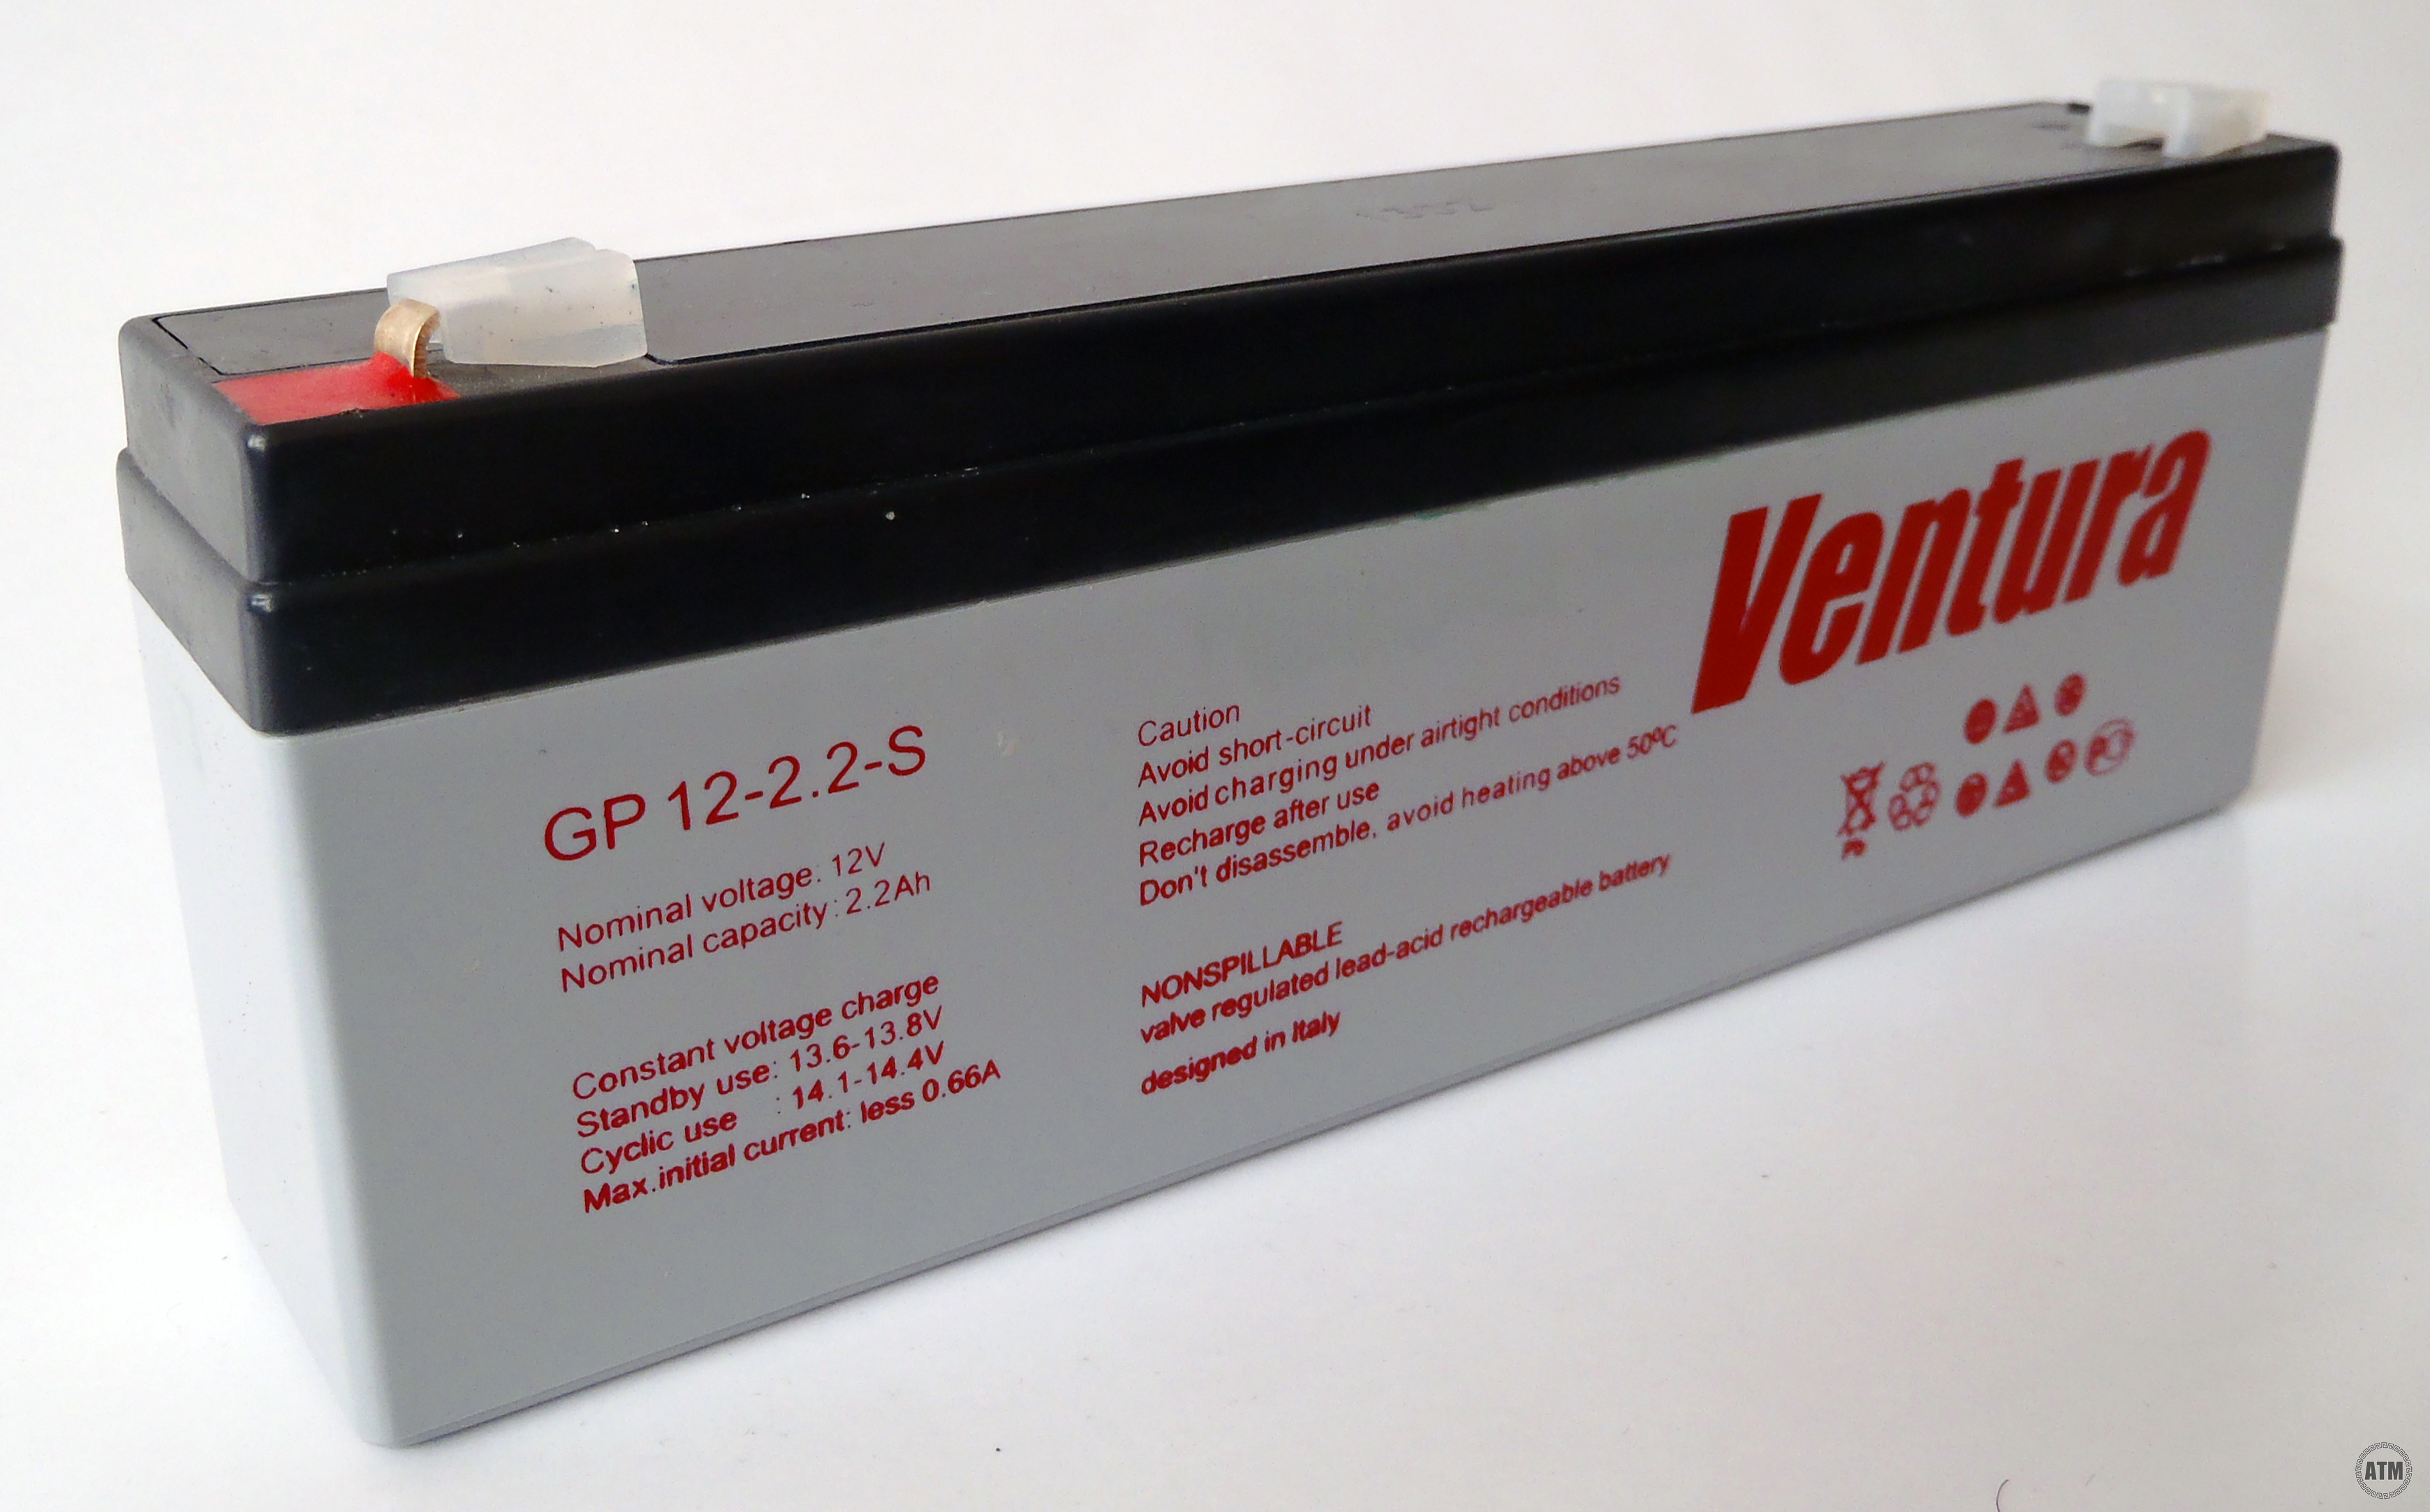 GP 12-1.2-S T1 - аккумулятор VENTURA 1.2ah 12V  